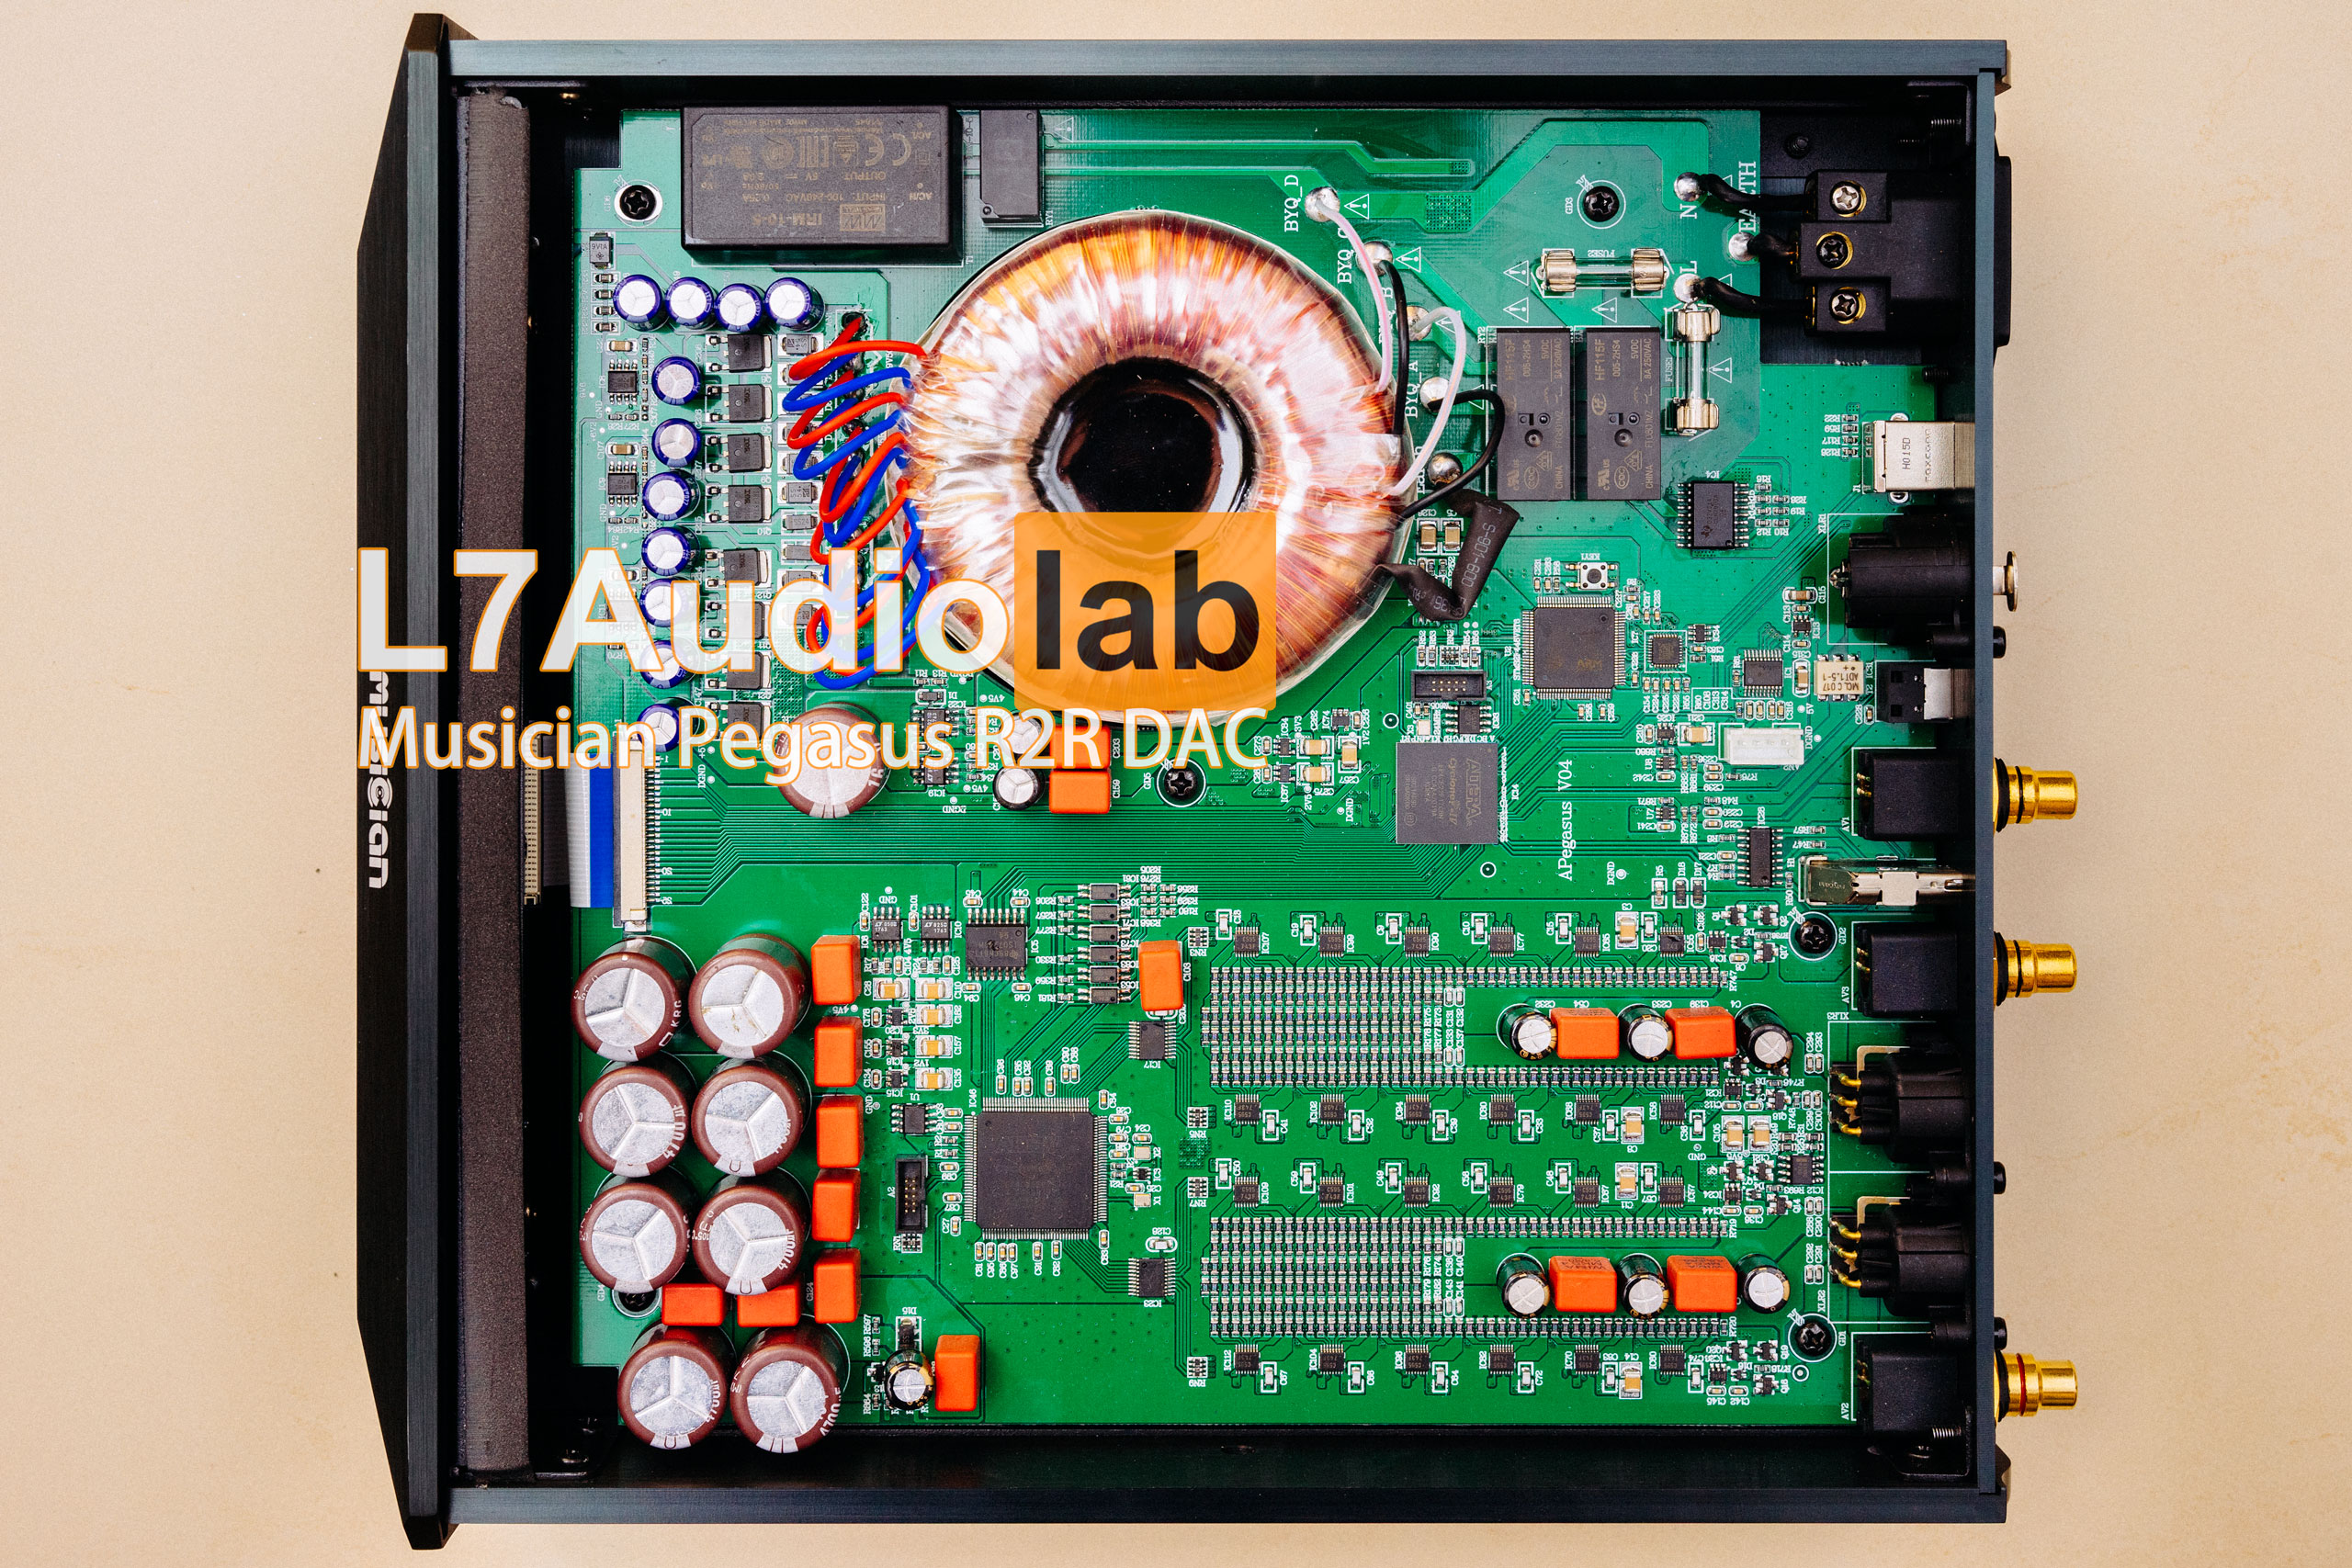 Measurements of Musician Pegasus R2R DAC - L7Audiolab